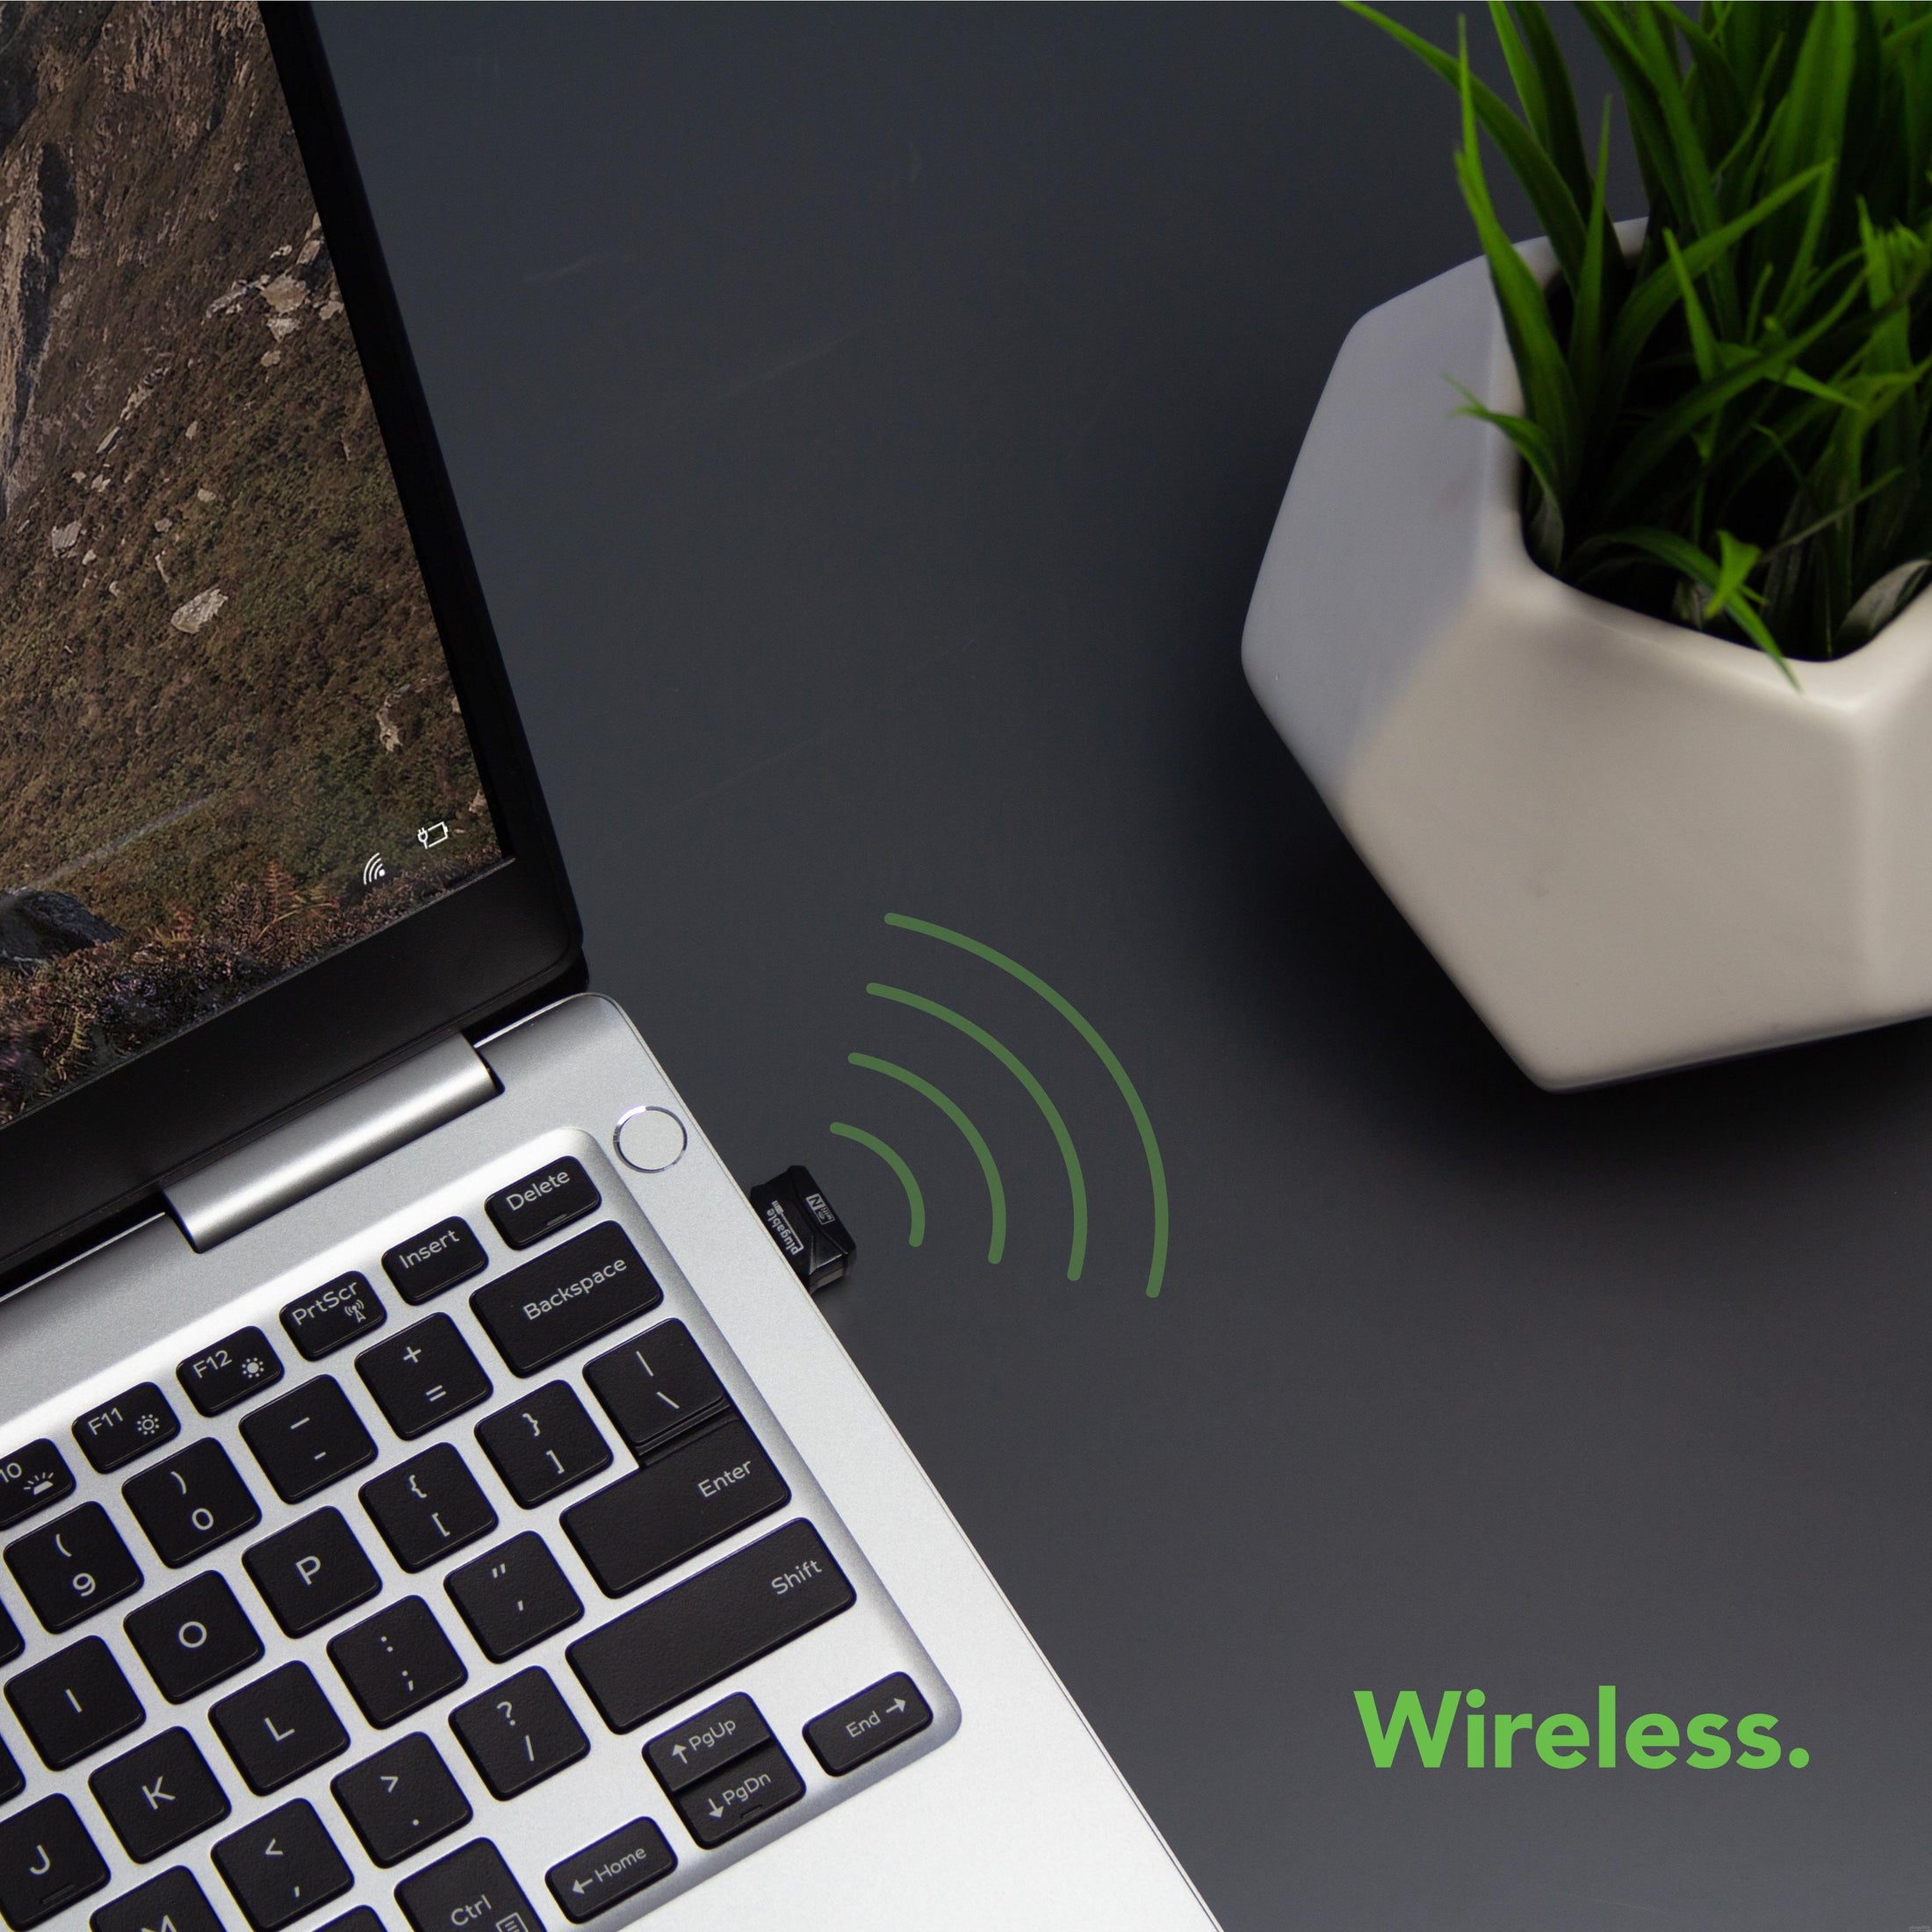 Wireless USB WiFi Adapter - Wifi dongle - Wireless Network Adapters, Networking IO Products